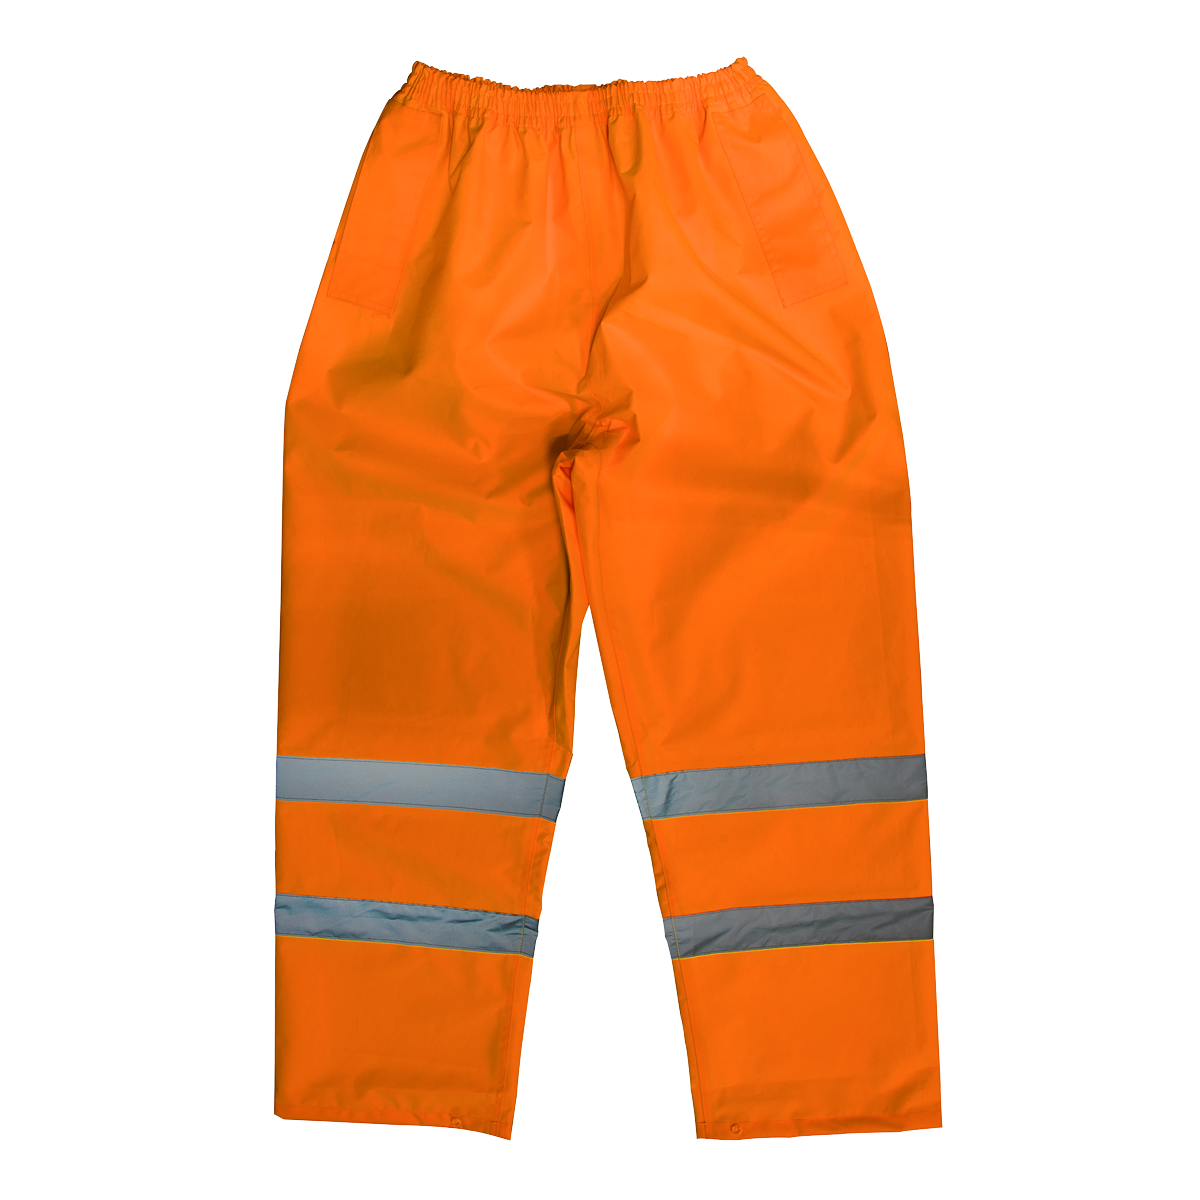 Hi-Vis Orange Waterproof Trousers - X-Large - 807XLO - Farming Parts